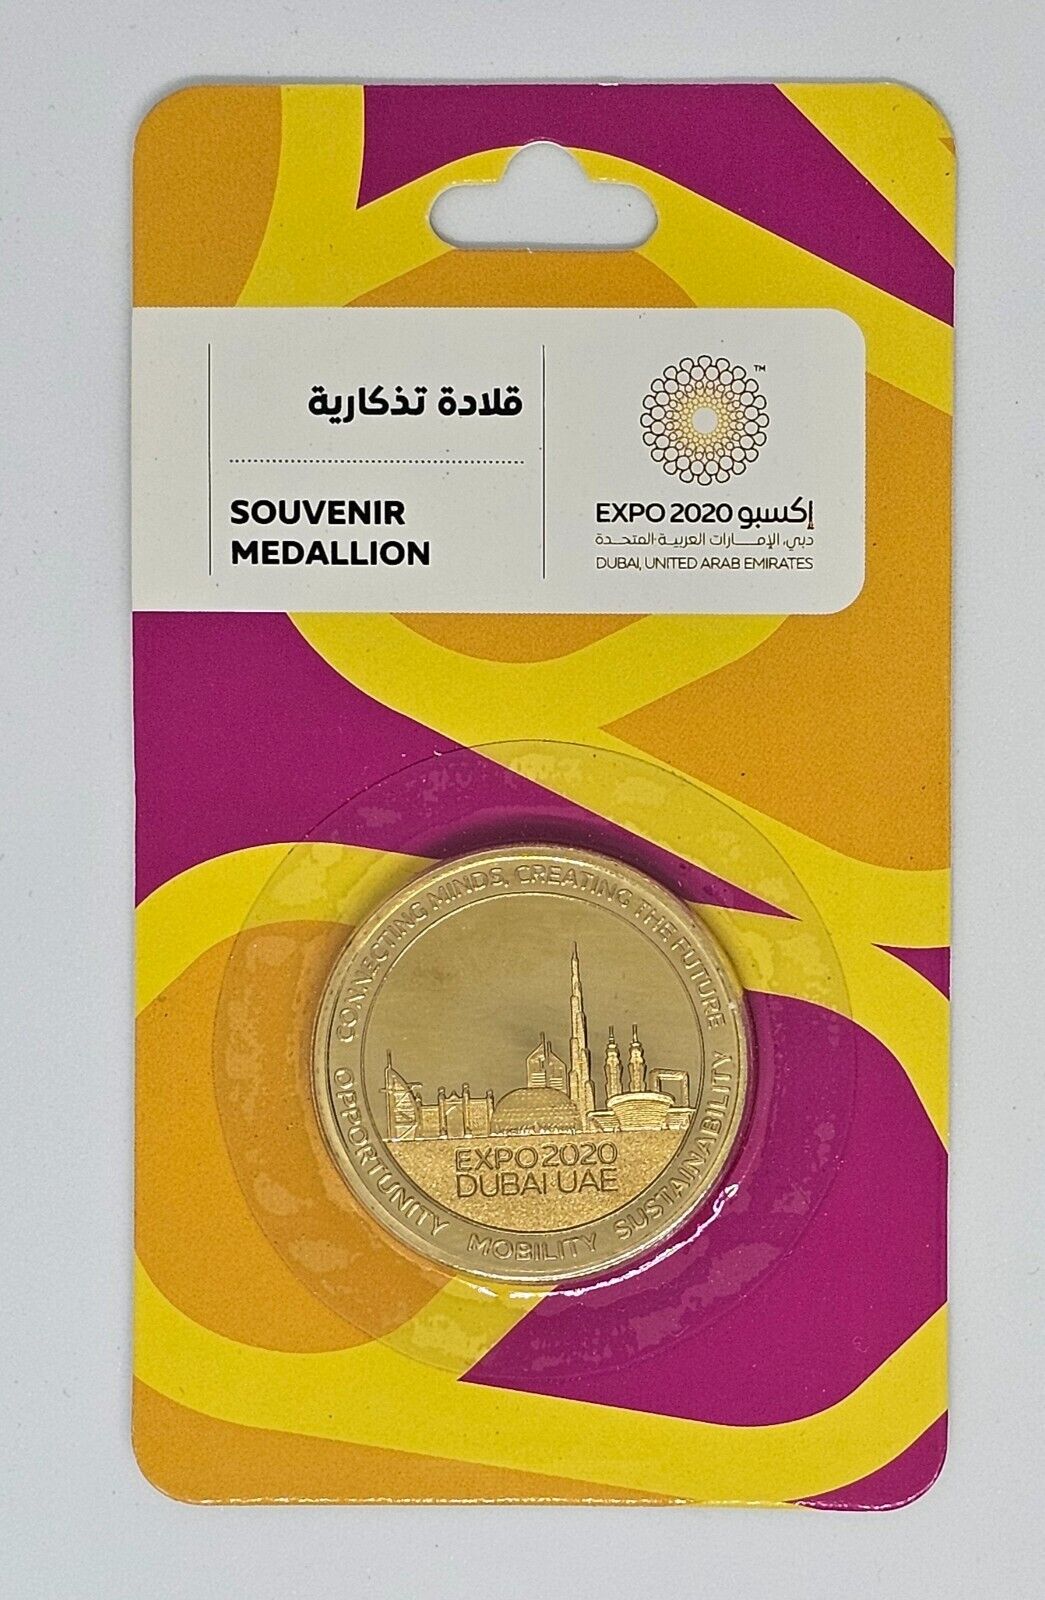 UAE EXPO 2020 Dubai Souvenir Medallion Glod colour